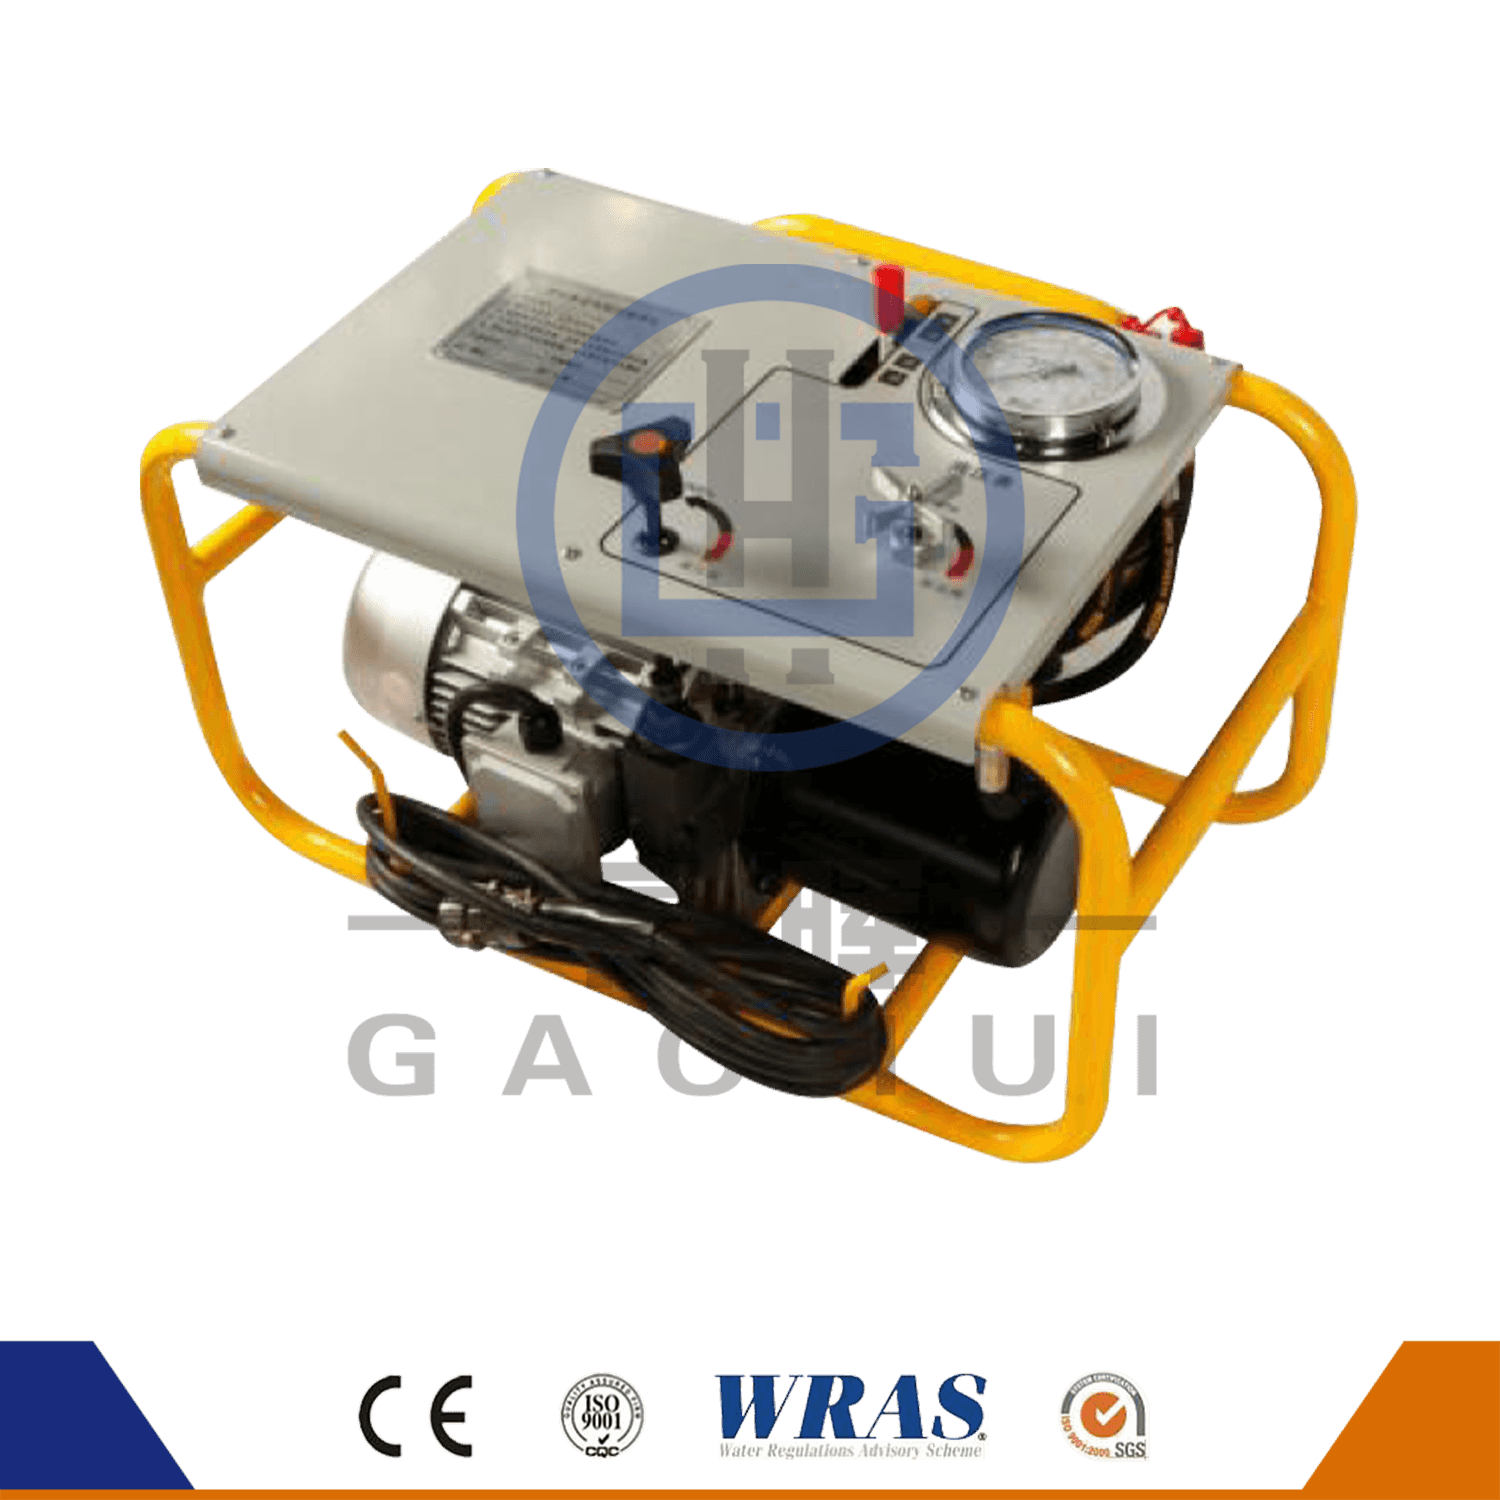 400 Hydraulic semi-automatic heat fusion welding machine